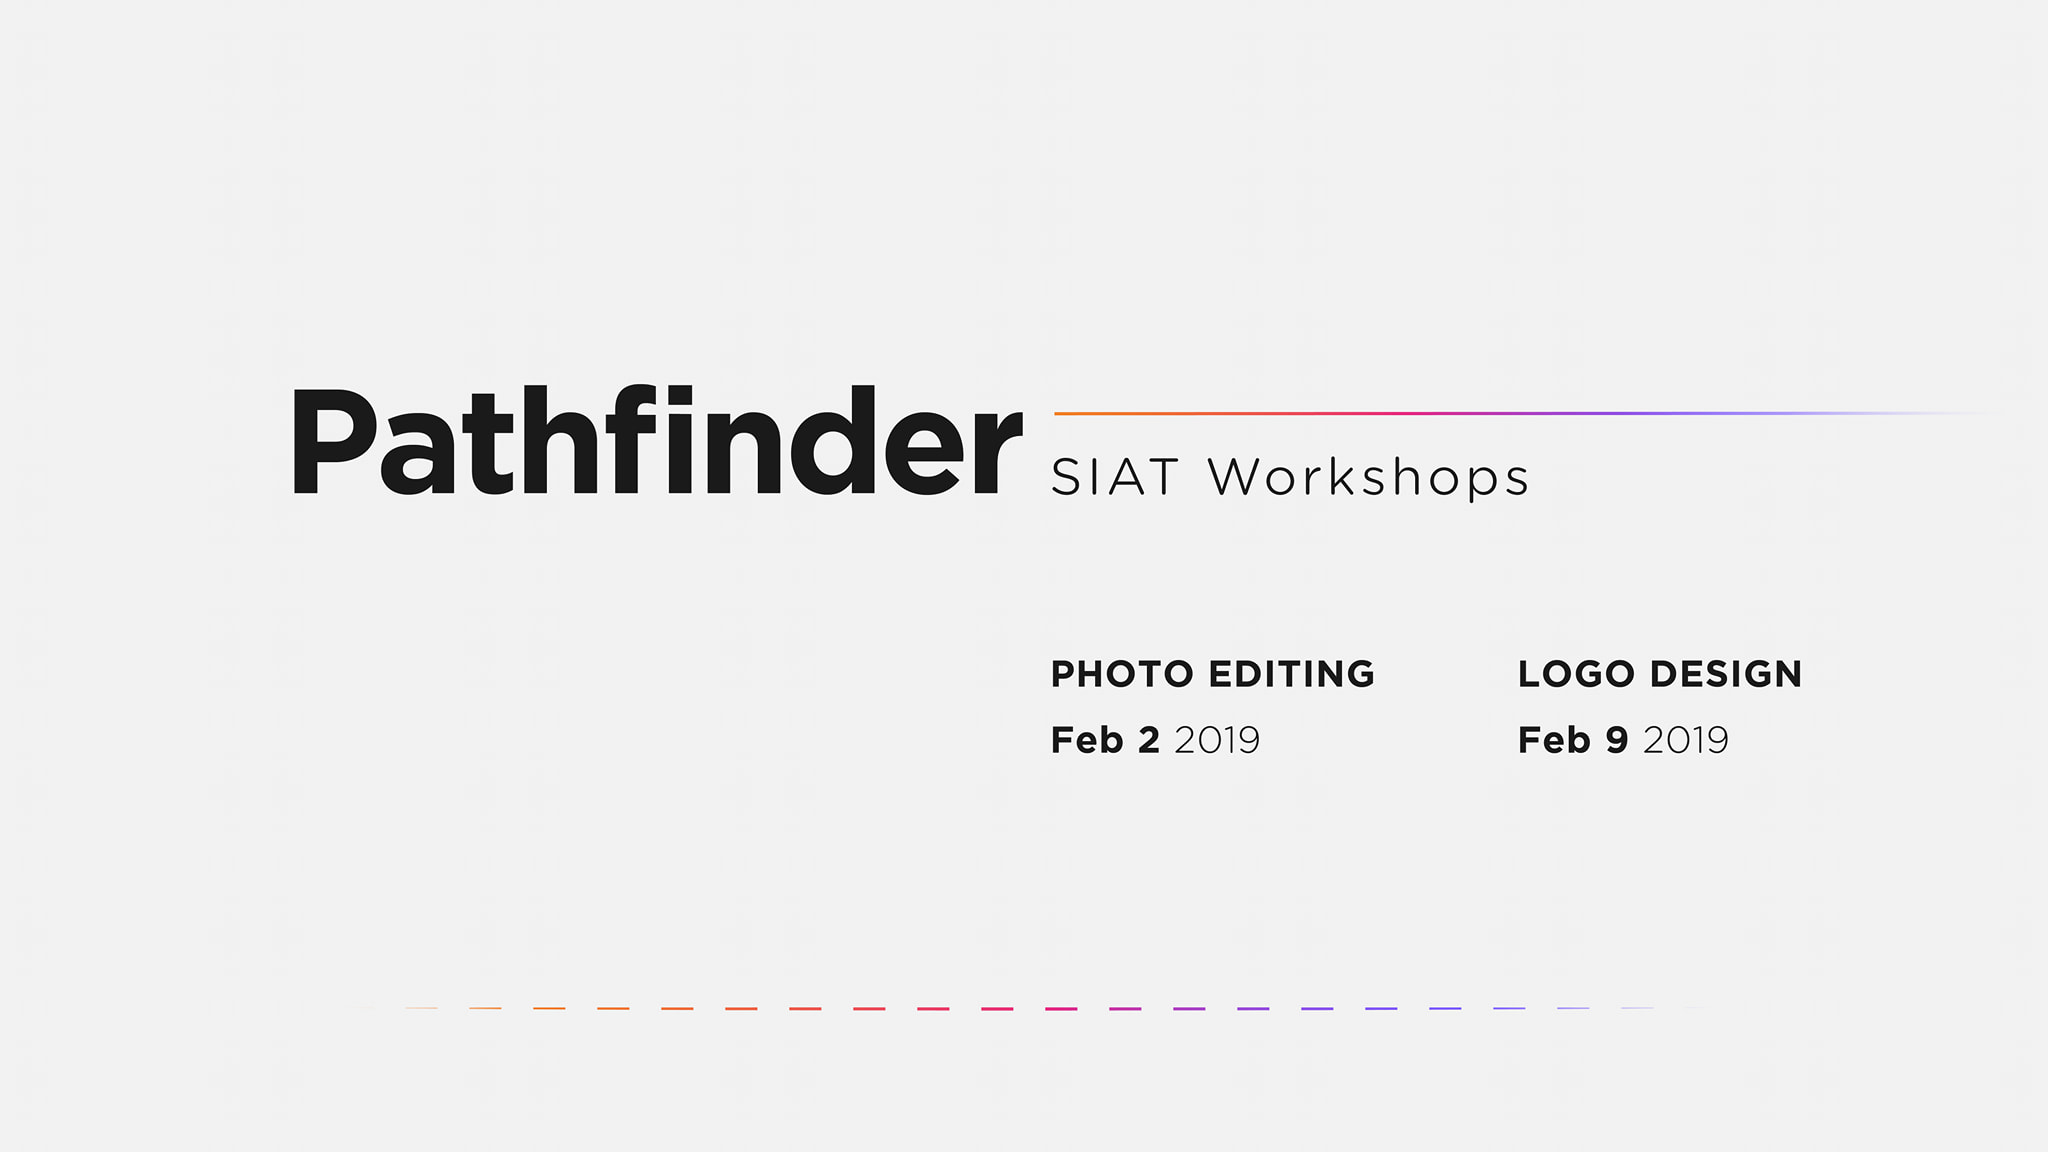 IATSU Pathfinder Workshops